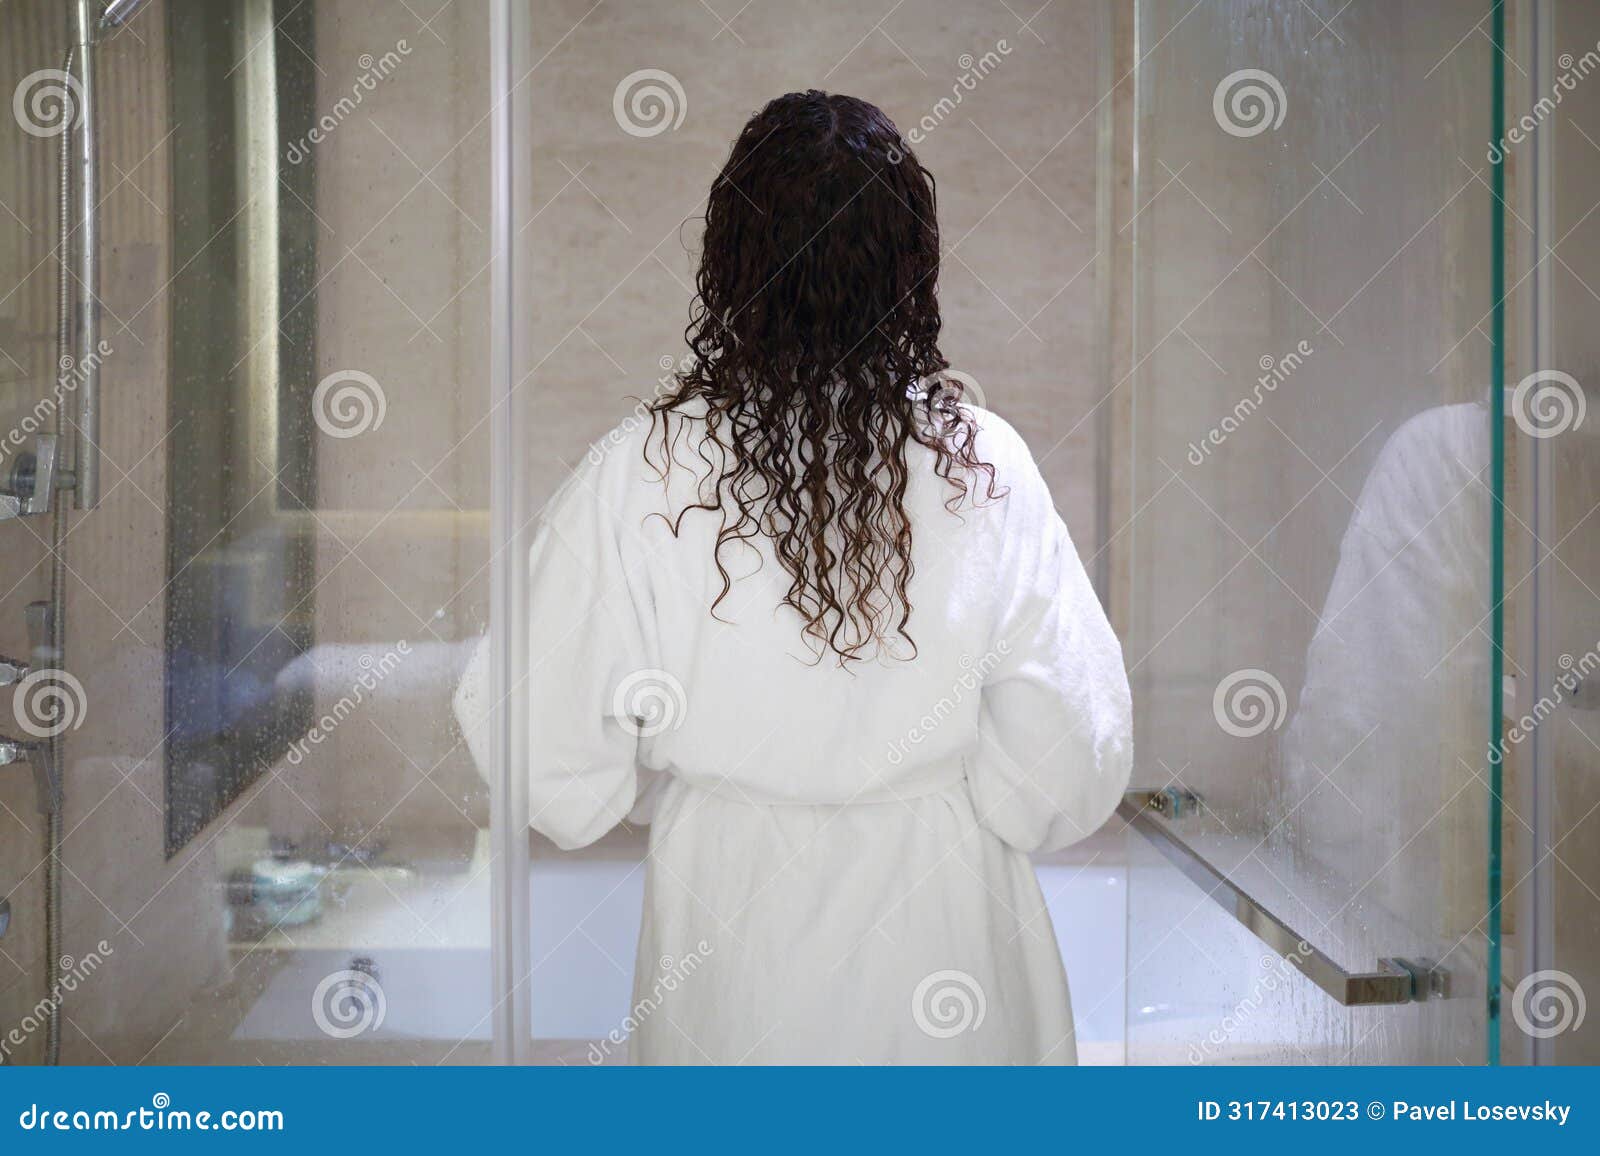 woman in white bathrobe enters bathroom with glass